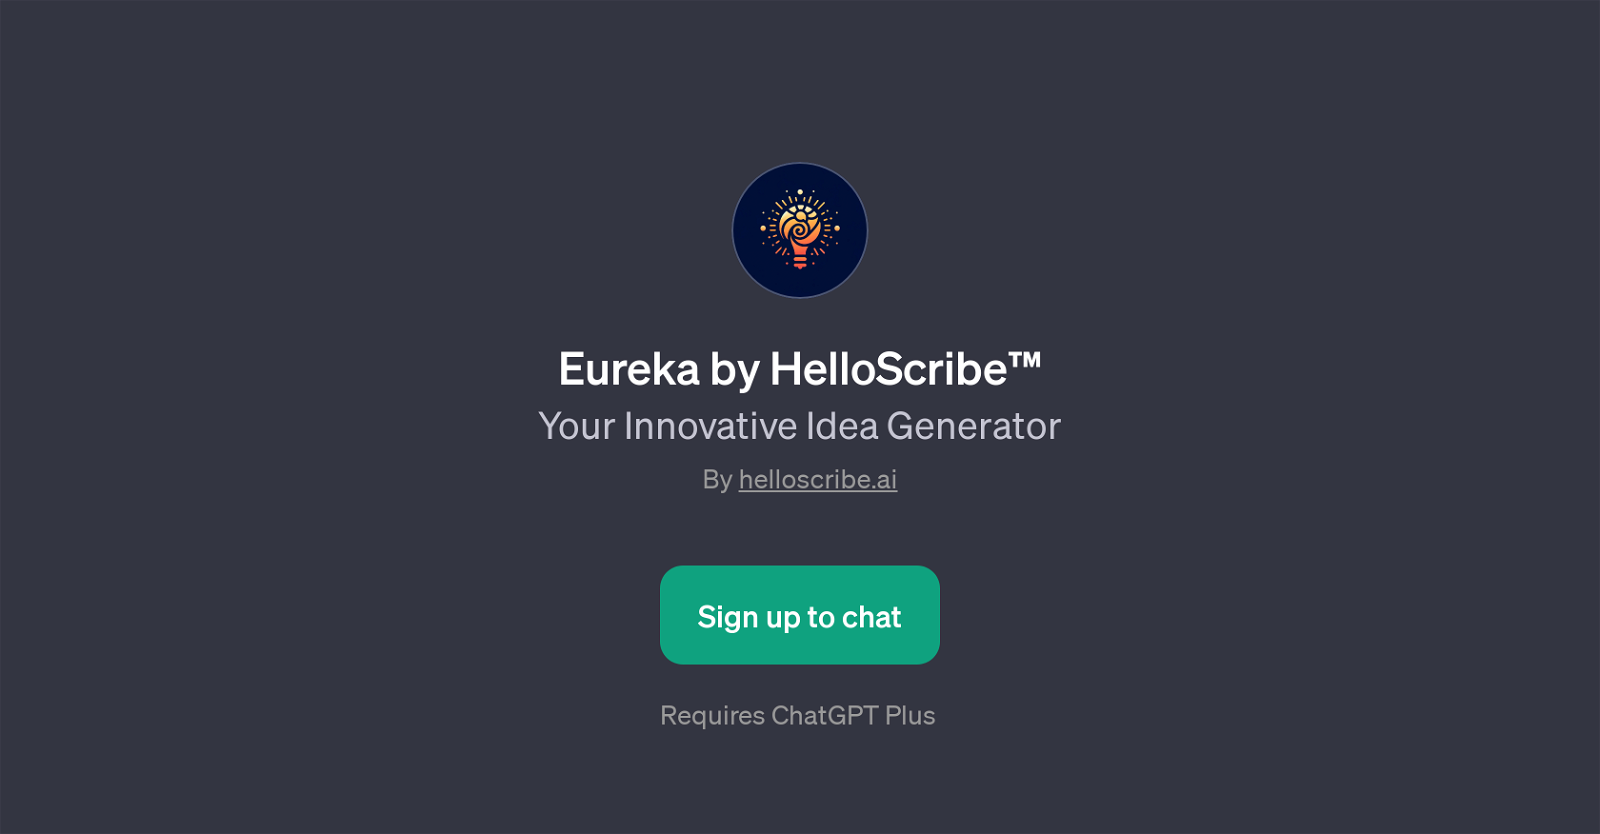 Eureka by HelloScribe website